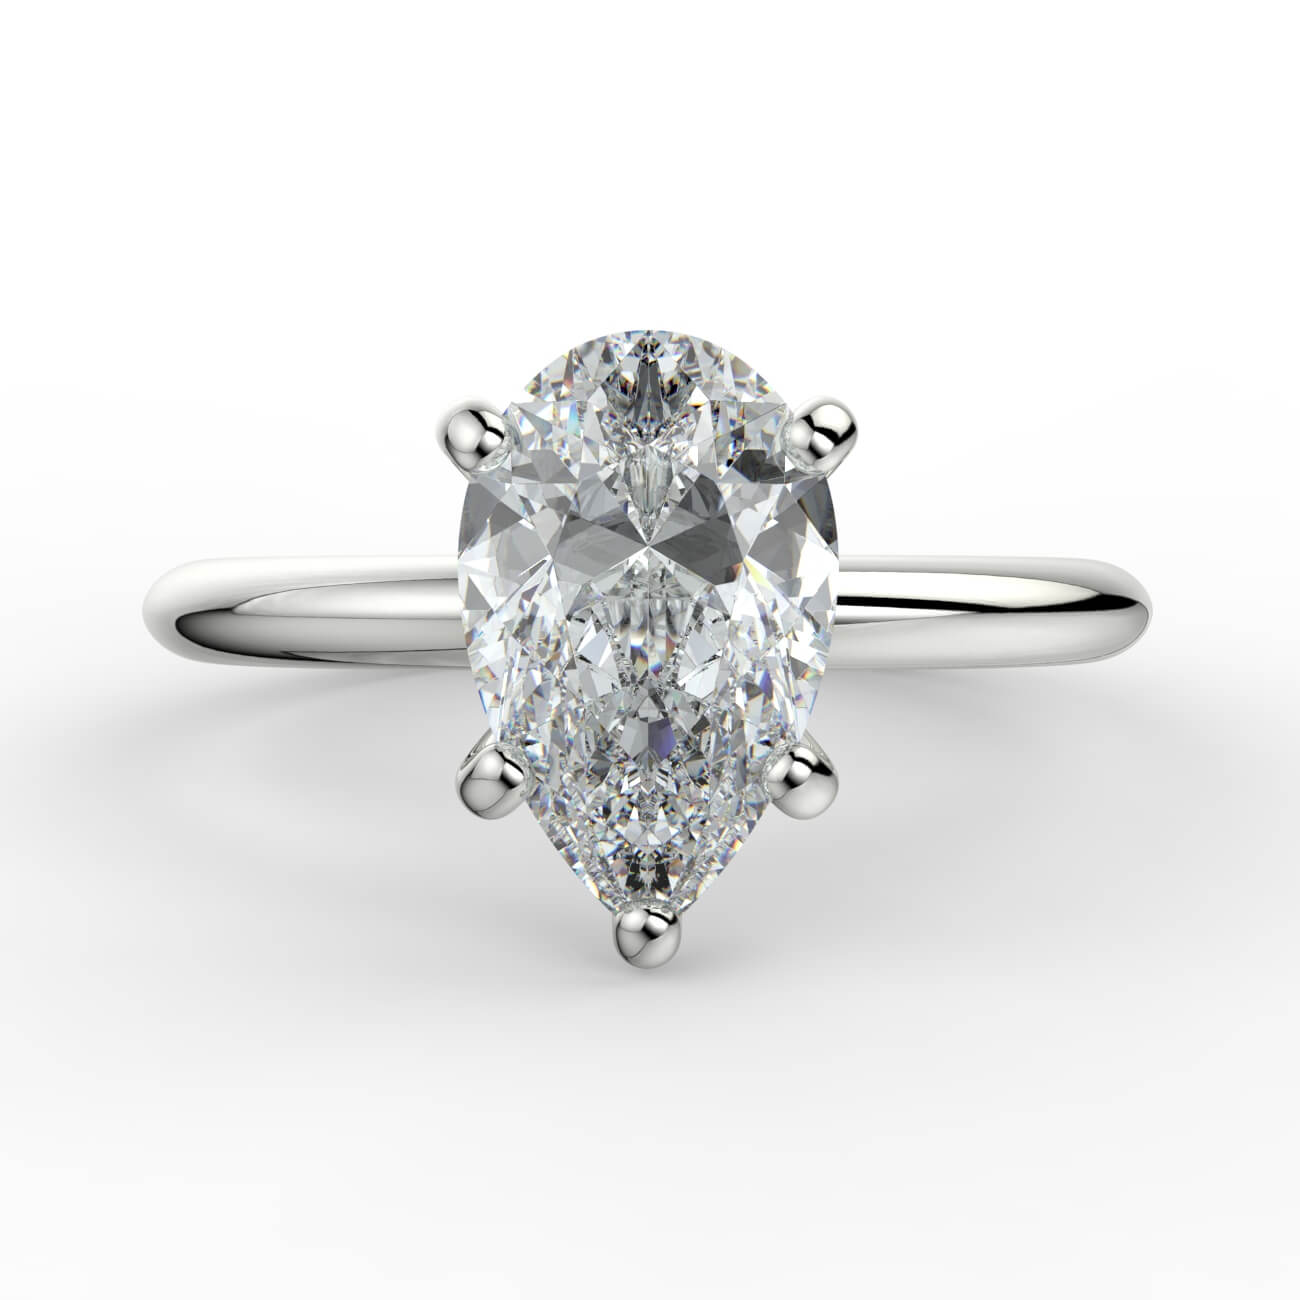 Solitaire pear shape diamond engagement ring in platinum – Australian Diamond Network